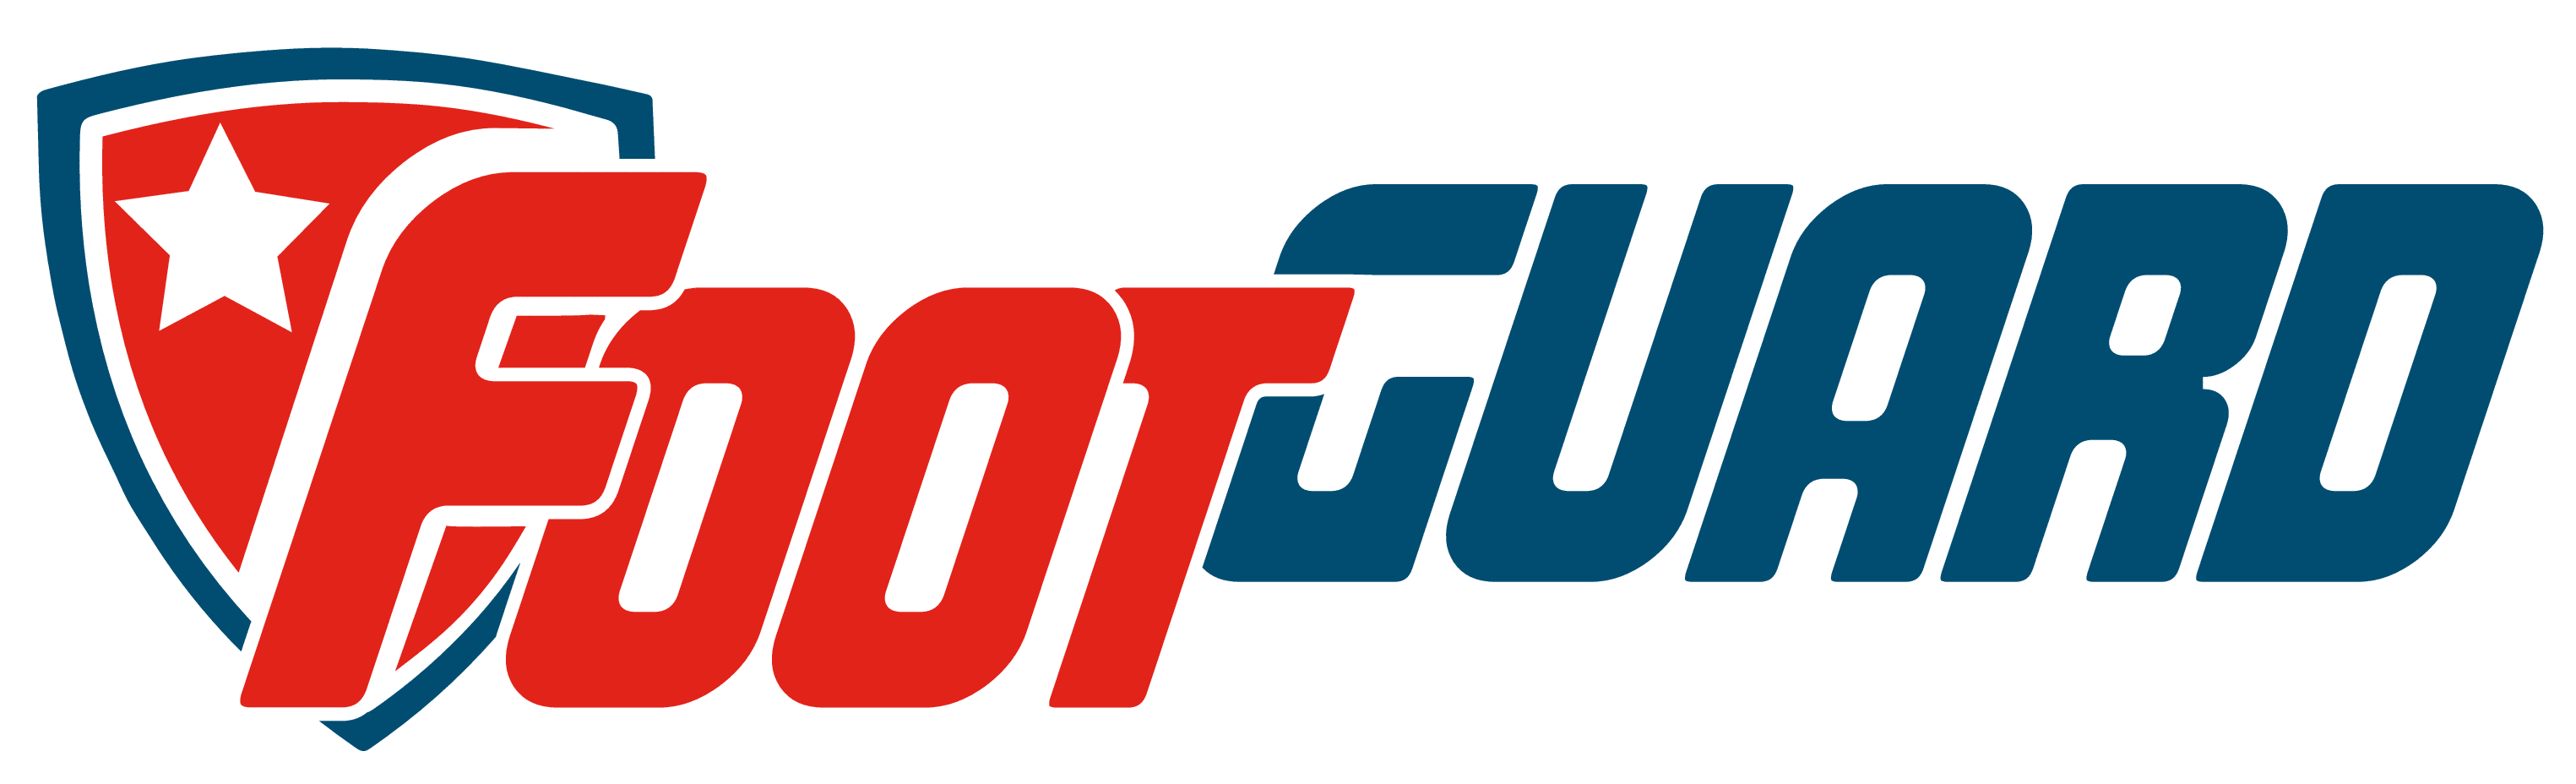 FOOT GUARD logo